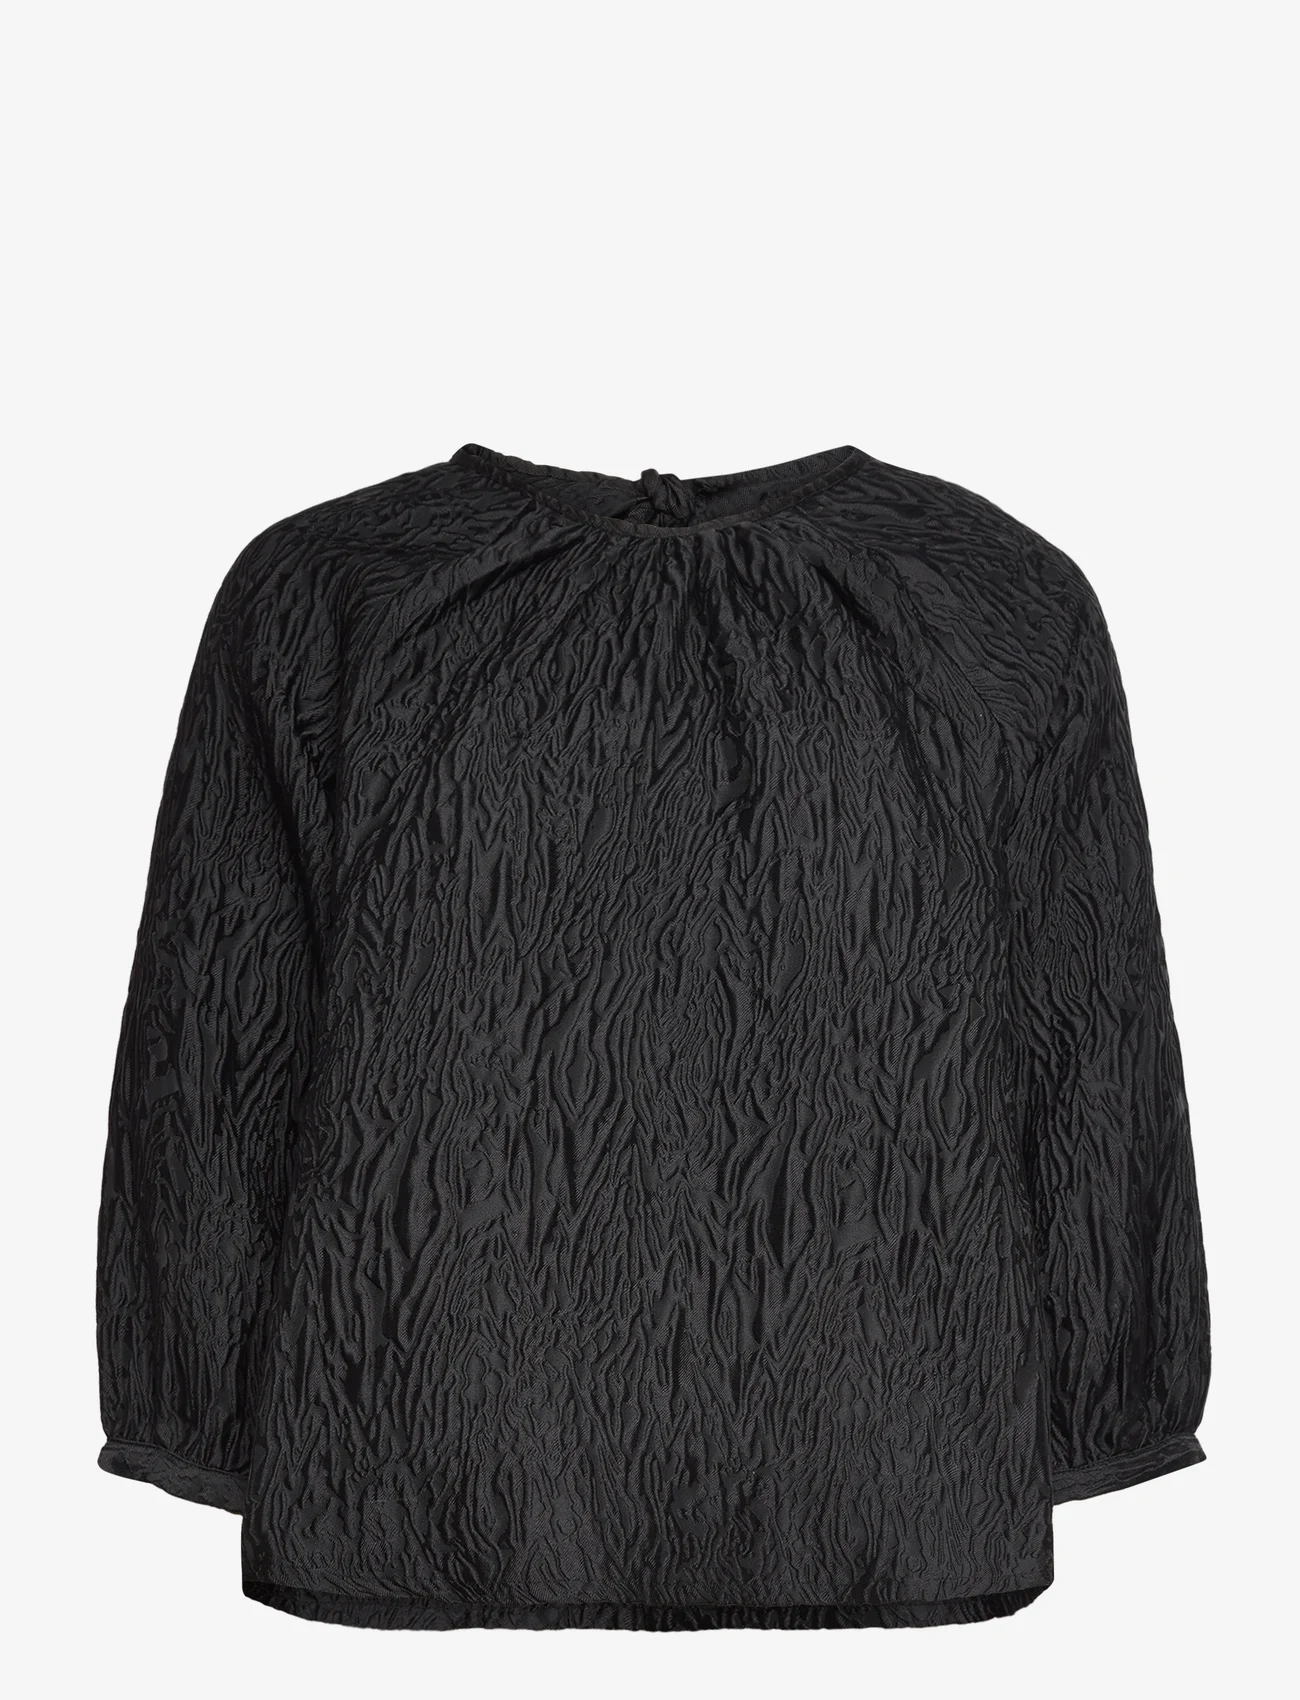 Part Two - DasiePW BL - long-sleeved blouses - black - 0